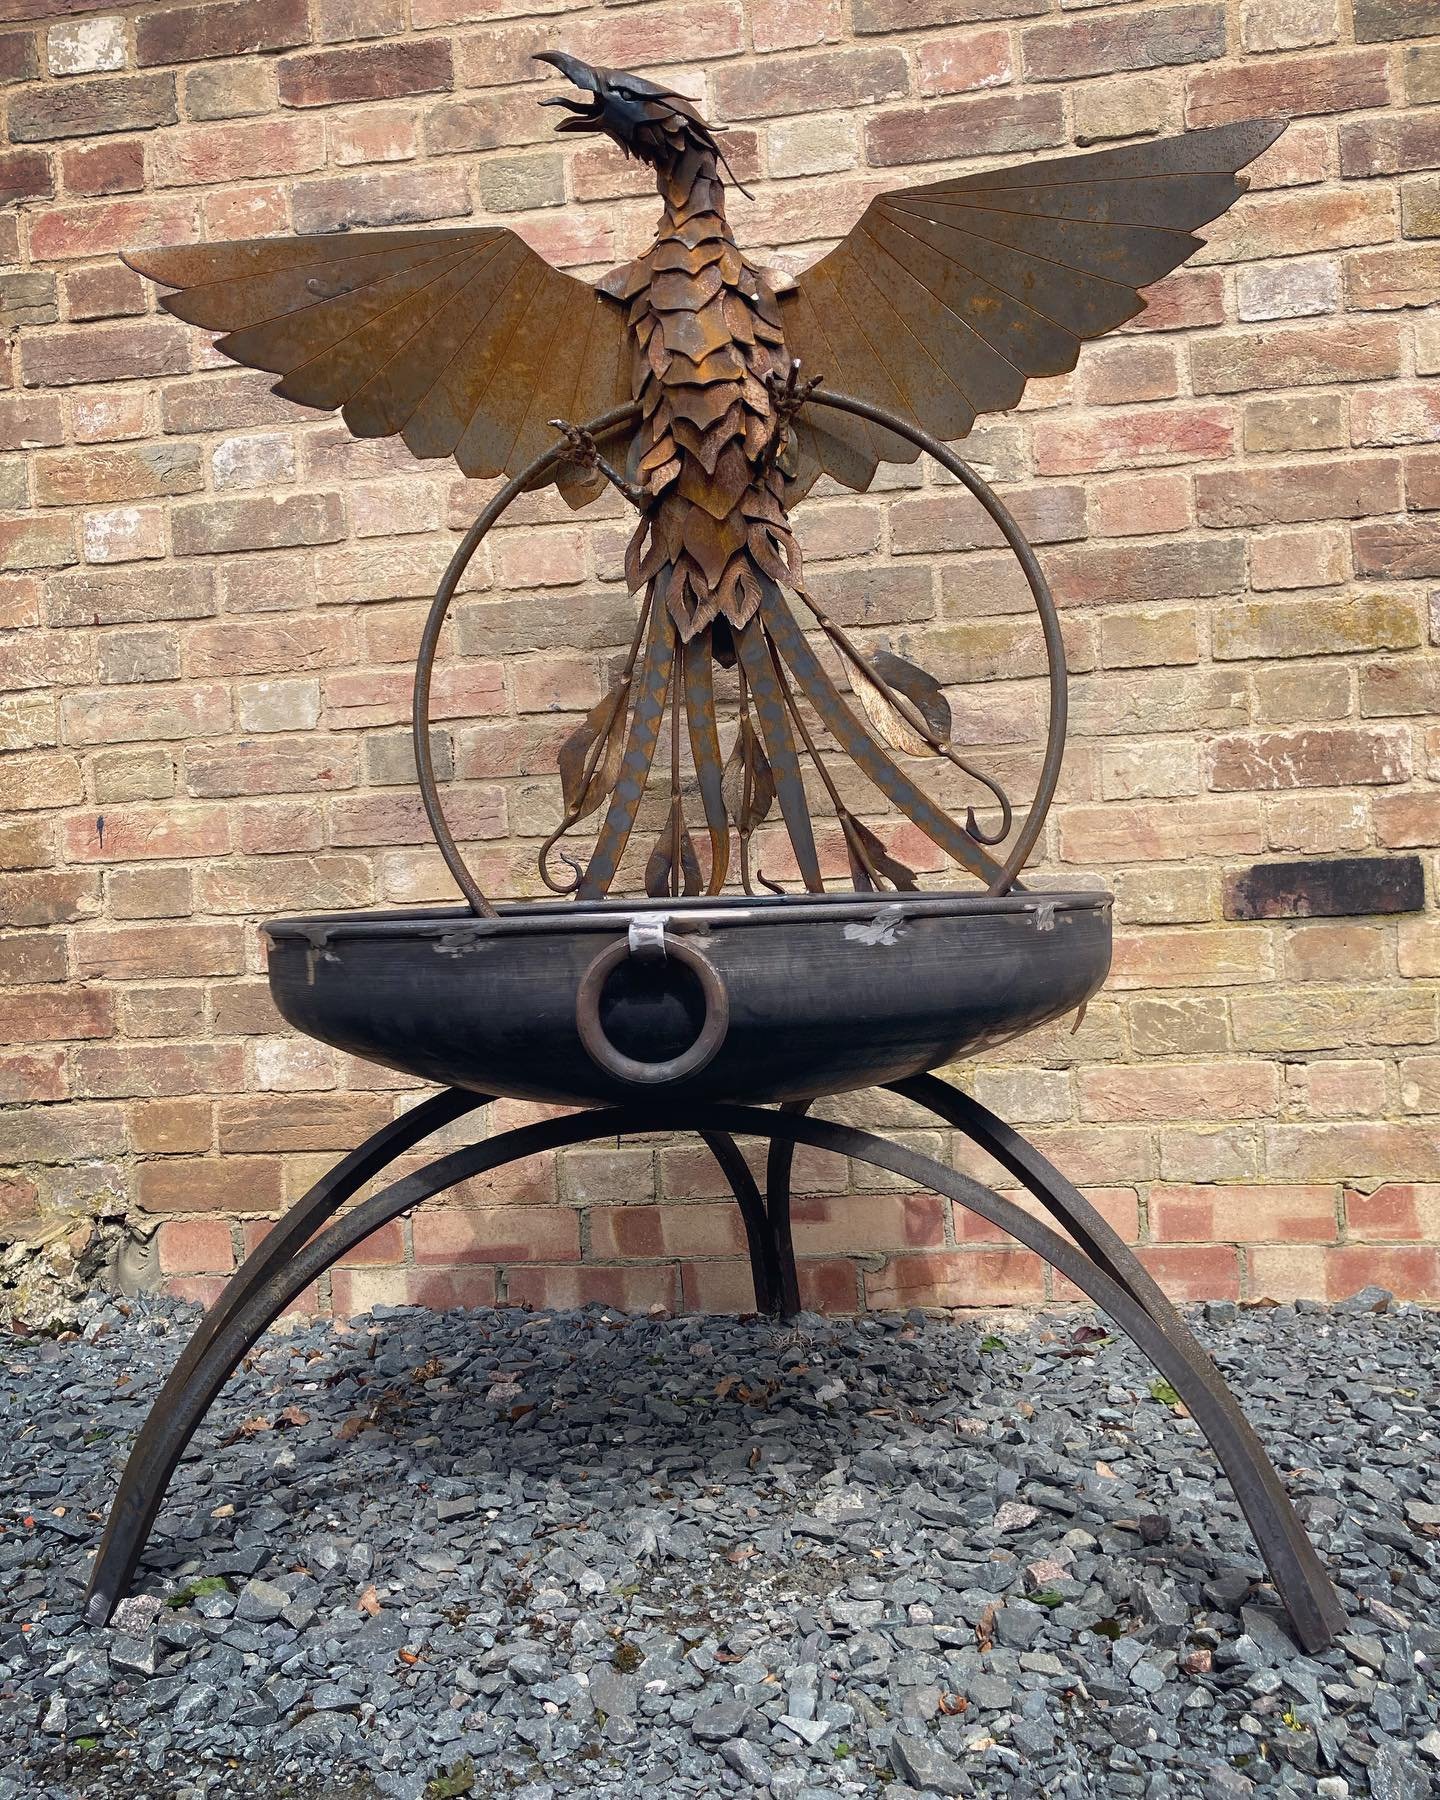 Phoenix firebowl ready for its patina! #firepit #sculpture #weldedsculpture #artwelding #blacksmith #blacksmithing #artistblacksmith #metalwork #gardensculpture #uksculpture #gardendesignsideas #gardendesign